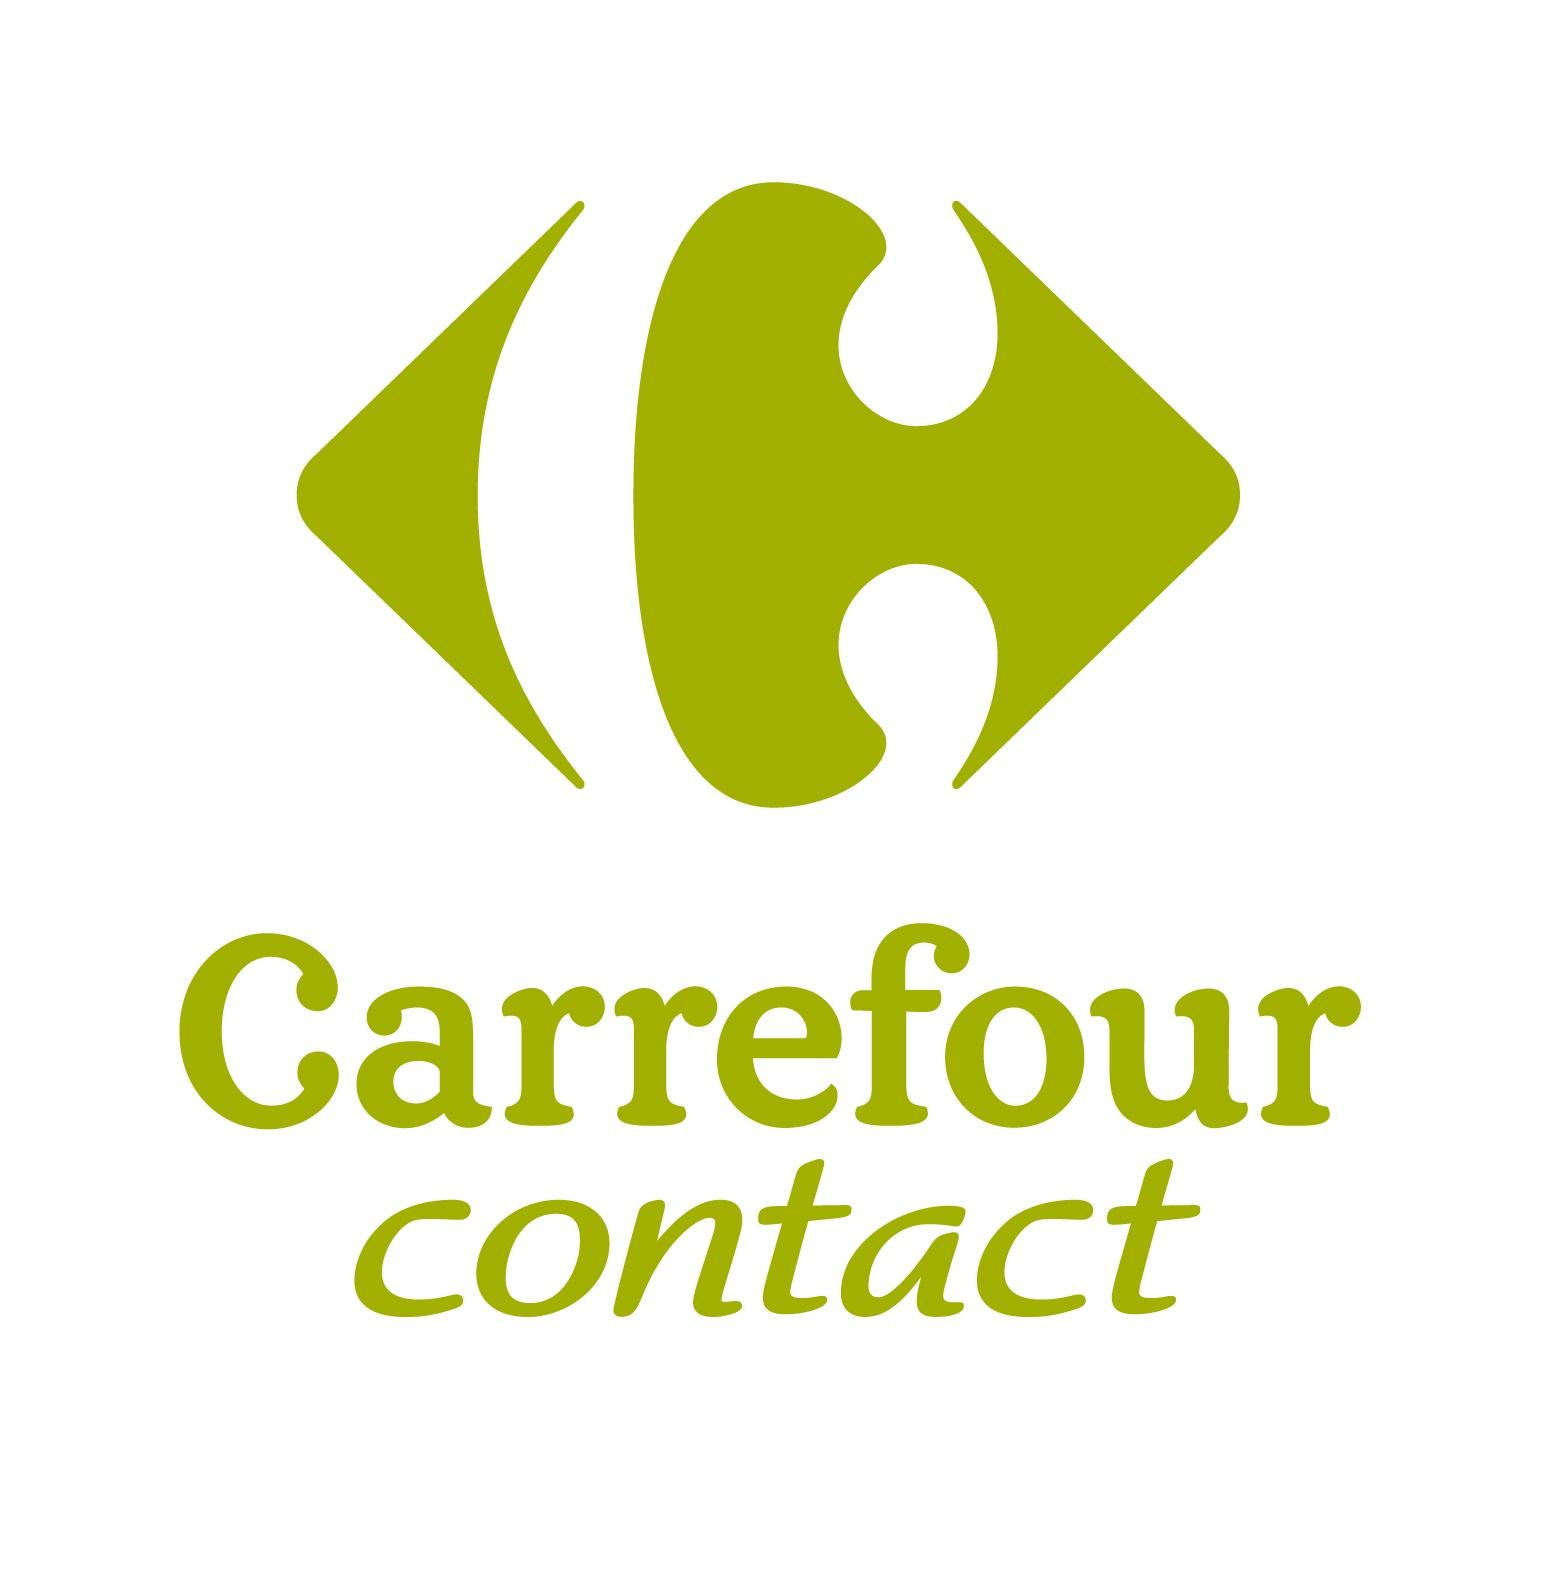 Carrefour Contact Wattignies